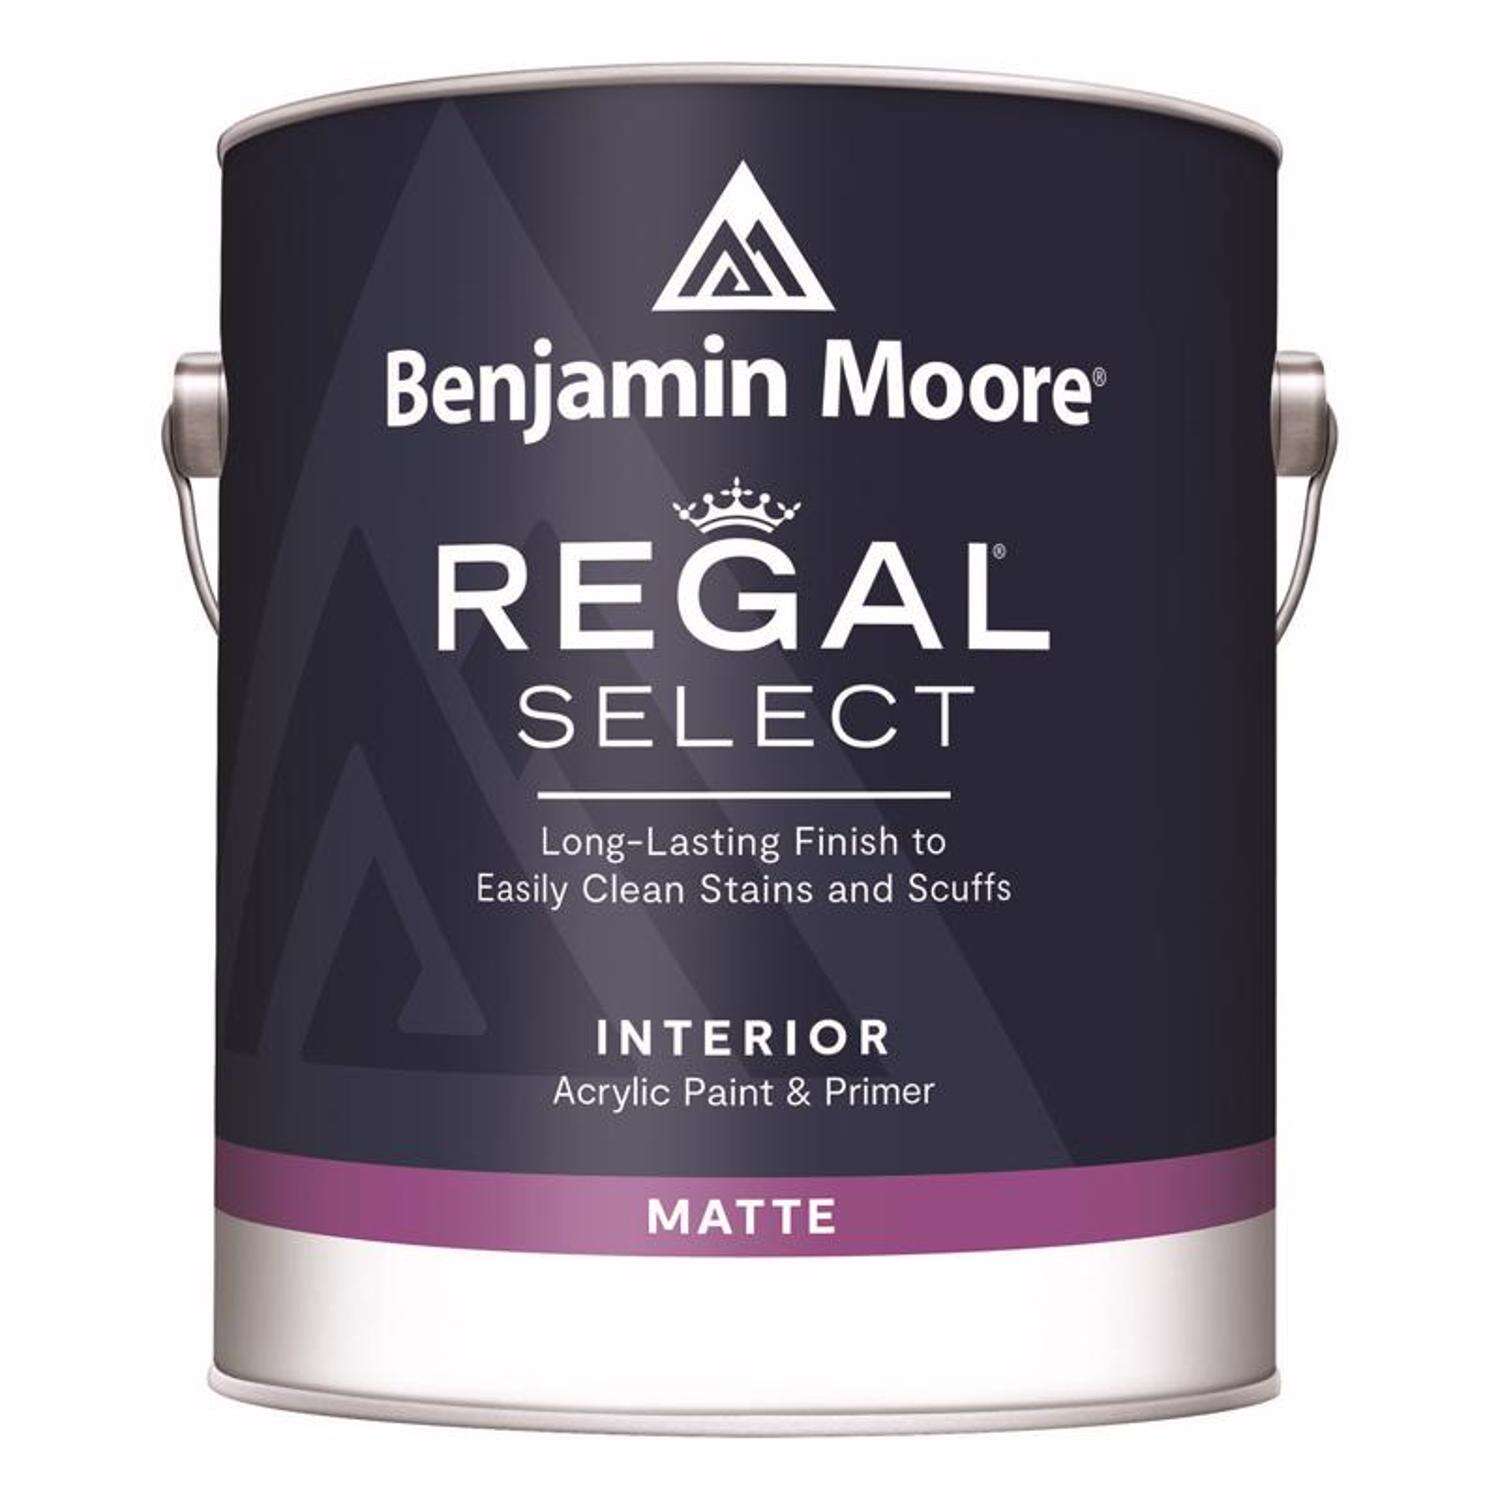 GAL REGAL SELECT Acrylic Interior Paint & Primer - Matte Finish